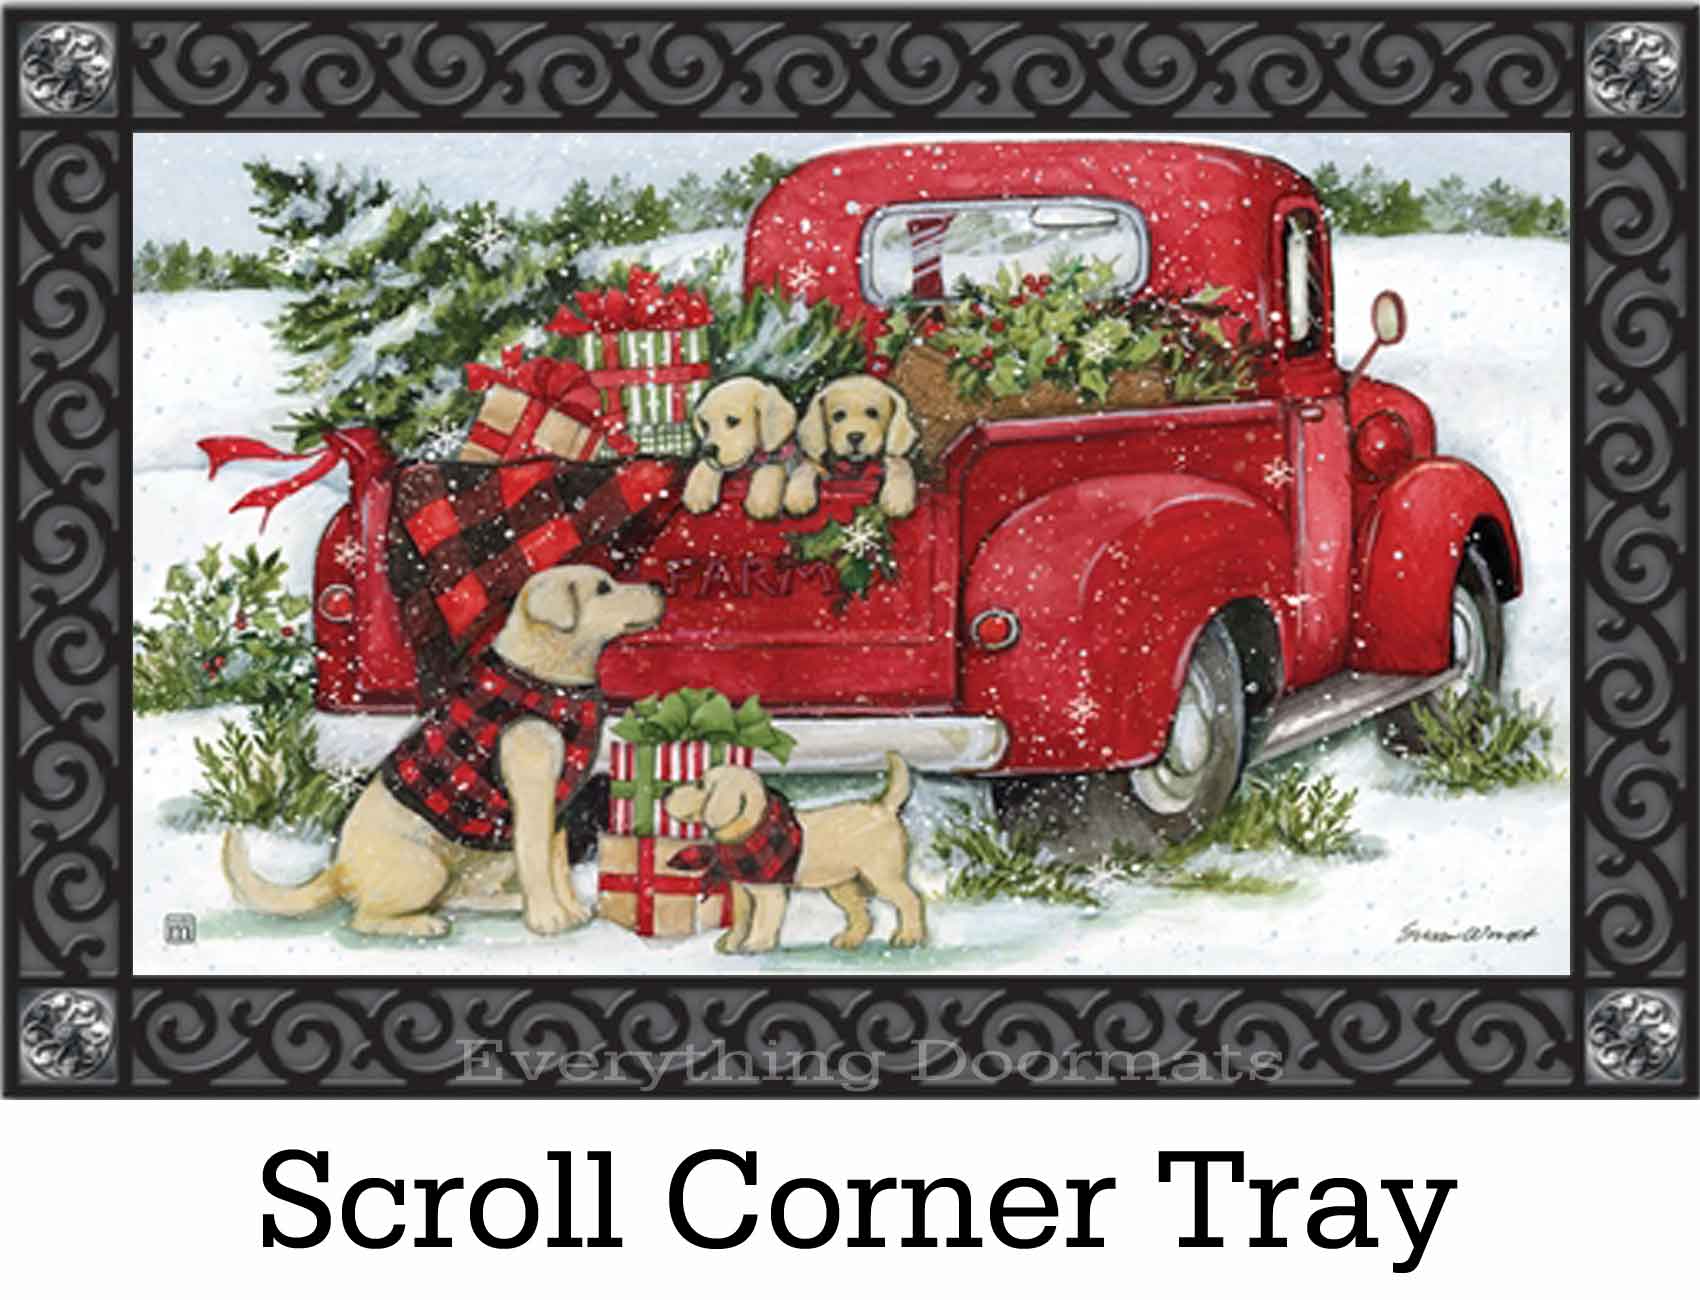 https://www.everythingdoormats.com/images/products/christmas-puppies-matmates-insert-doormat-in-outdoor-scroll-corner-tray.jpg